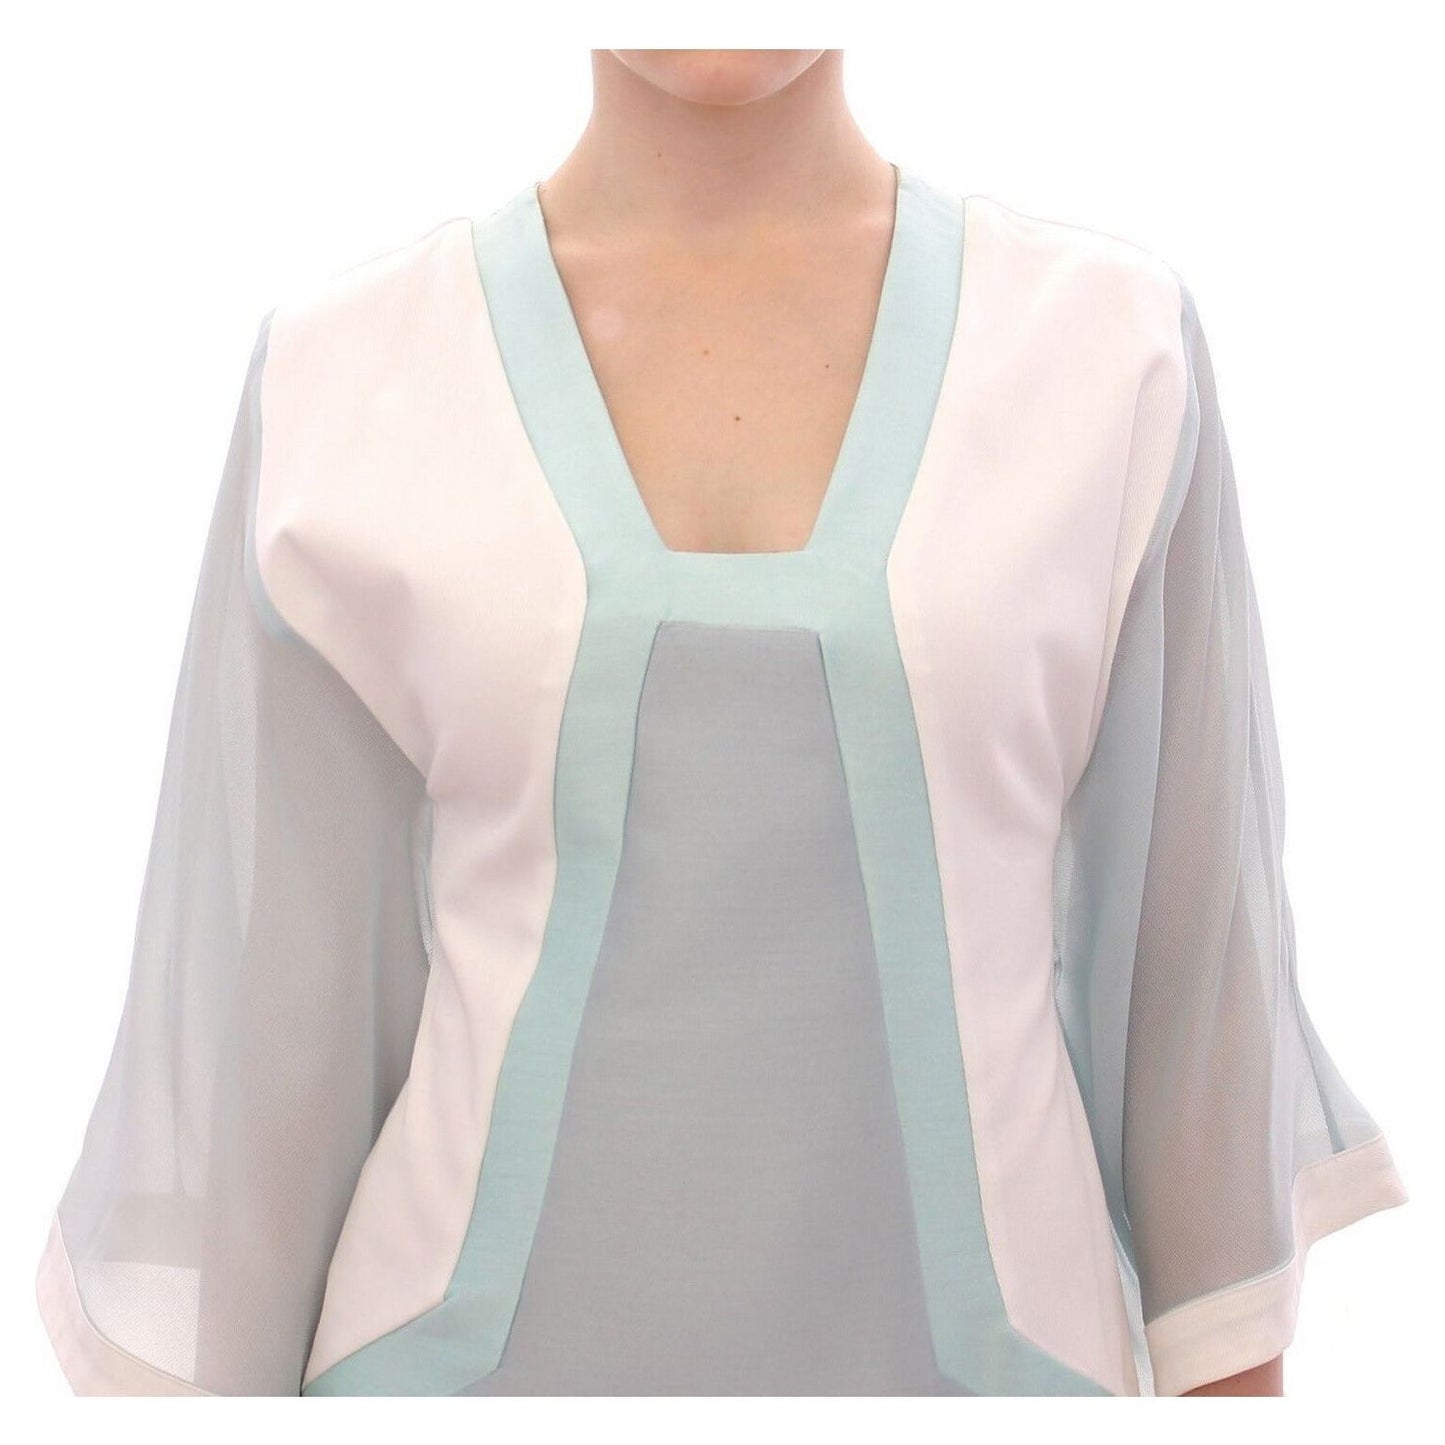 Sergei Grinko Elegant Turquoise Silk Sheath Dress WOMAN DRESSES white-silk-sheath-formal-turquoise-dress s-l1600-29-2-e53bb015-4d8.jpg